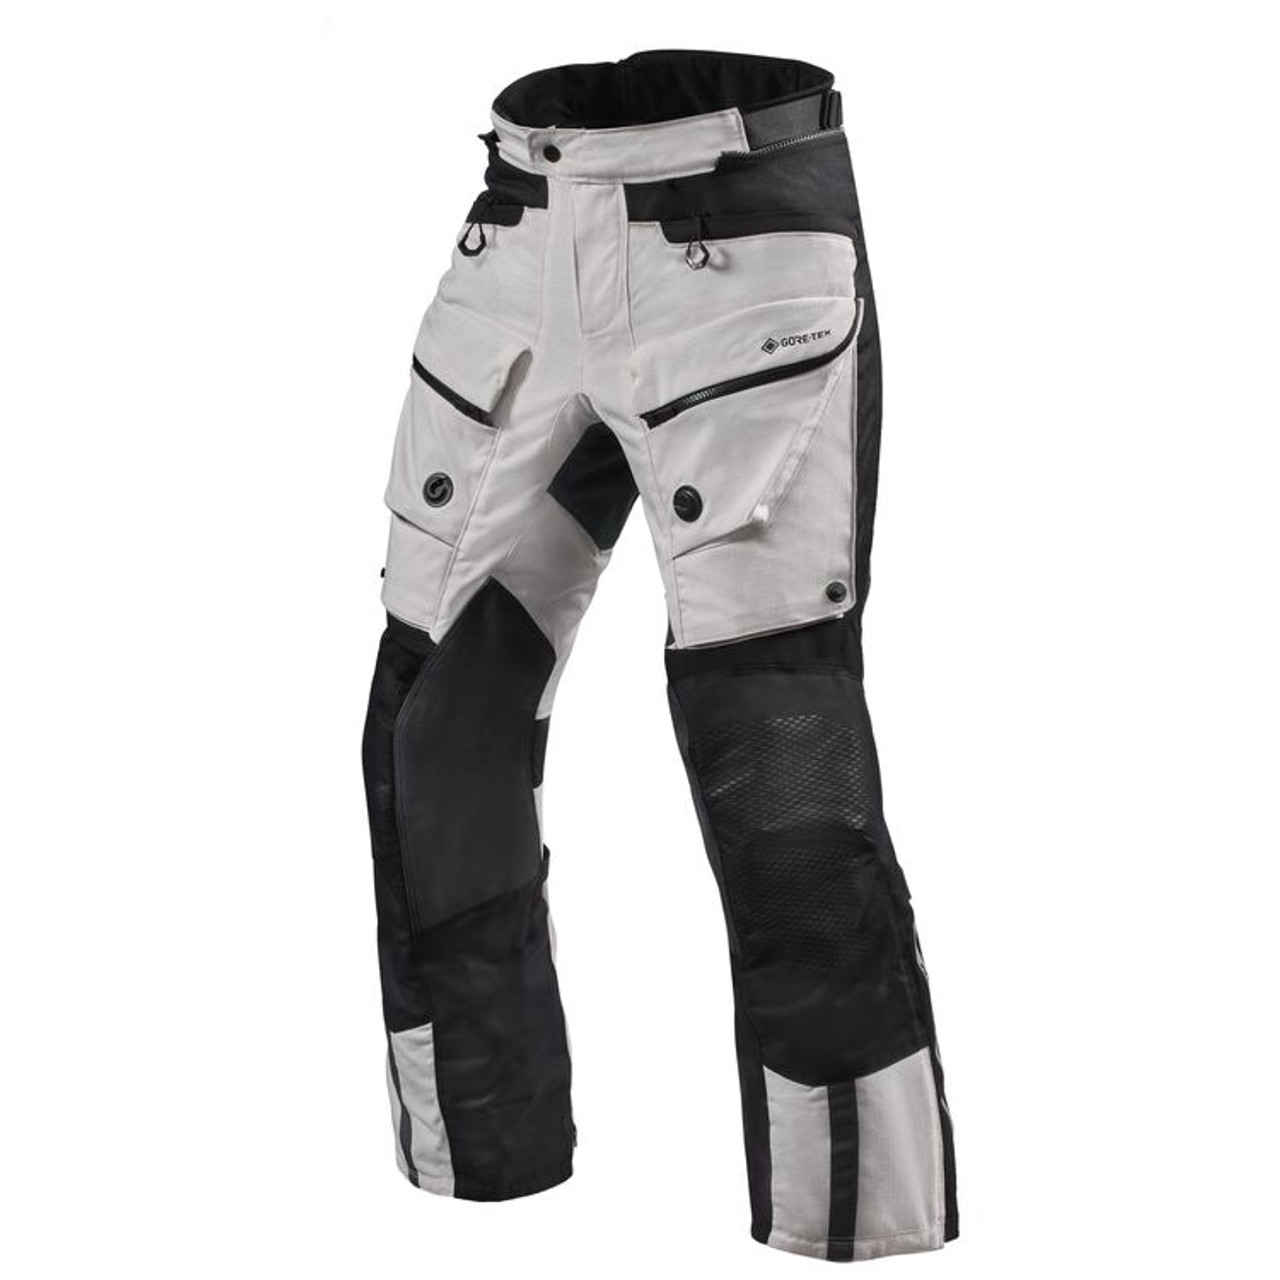 REV'IT! Neptune 2 Gore-Tex motorcycle pants | MKC Moto